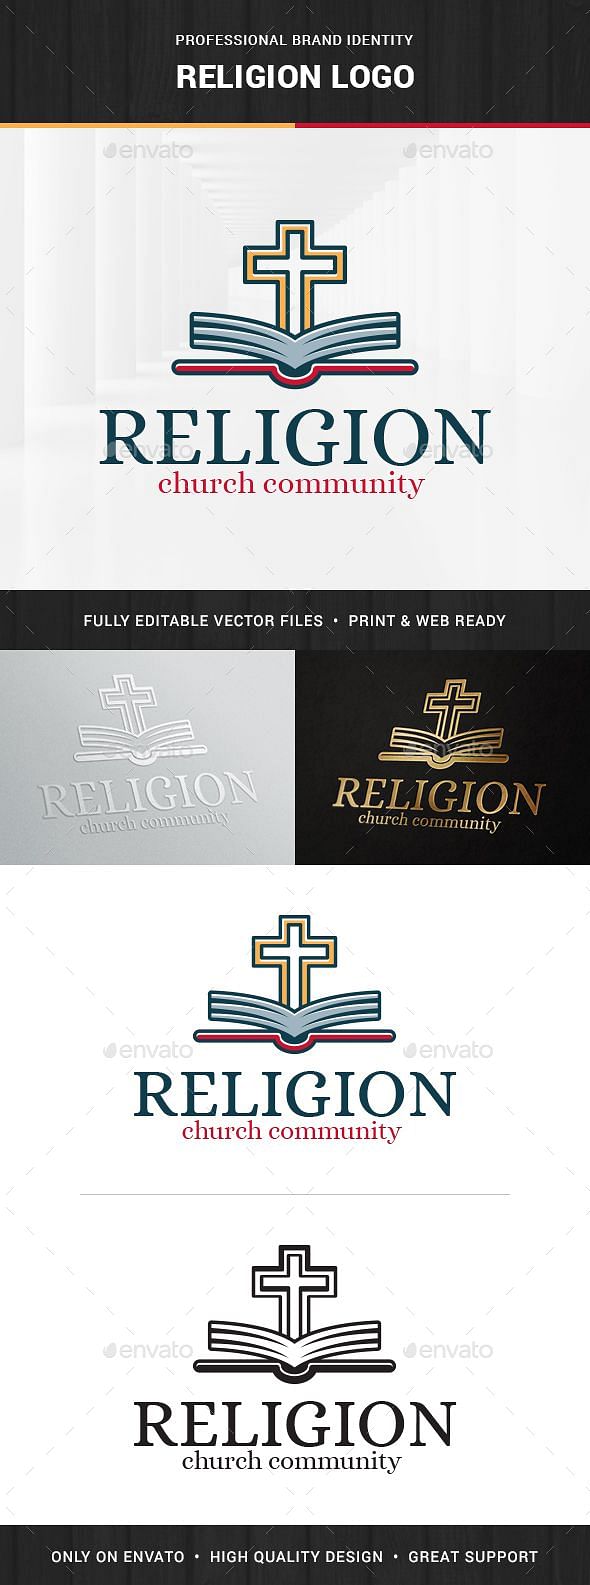 Collection of historic church logo designs